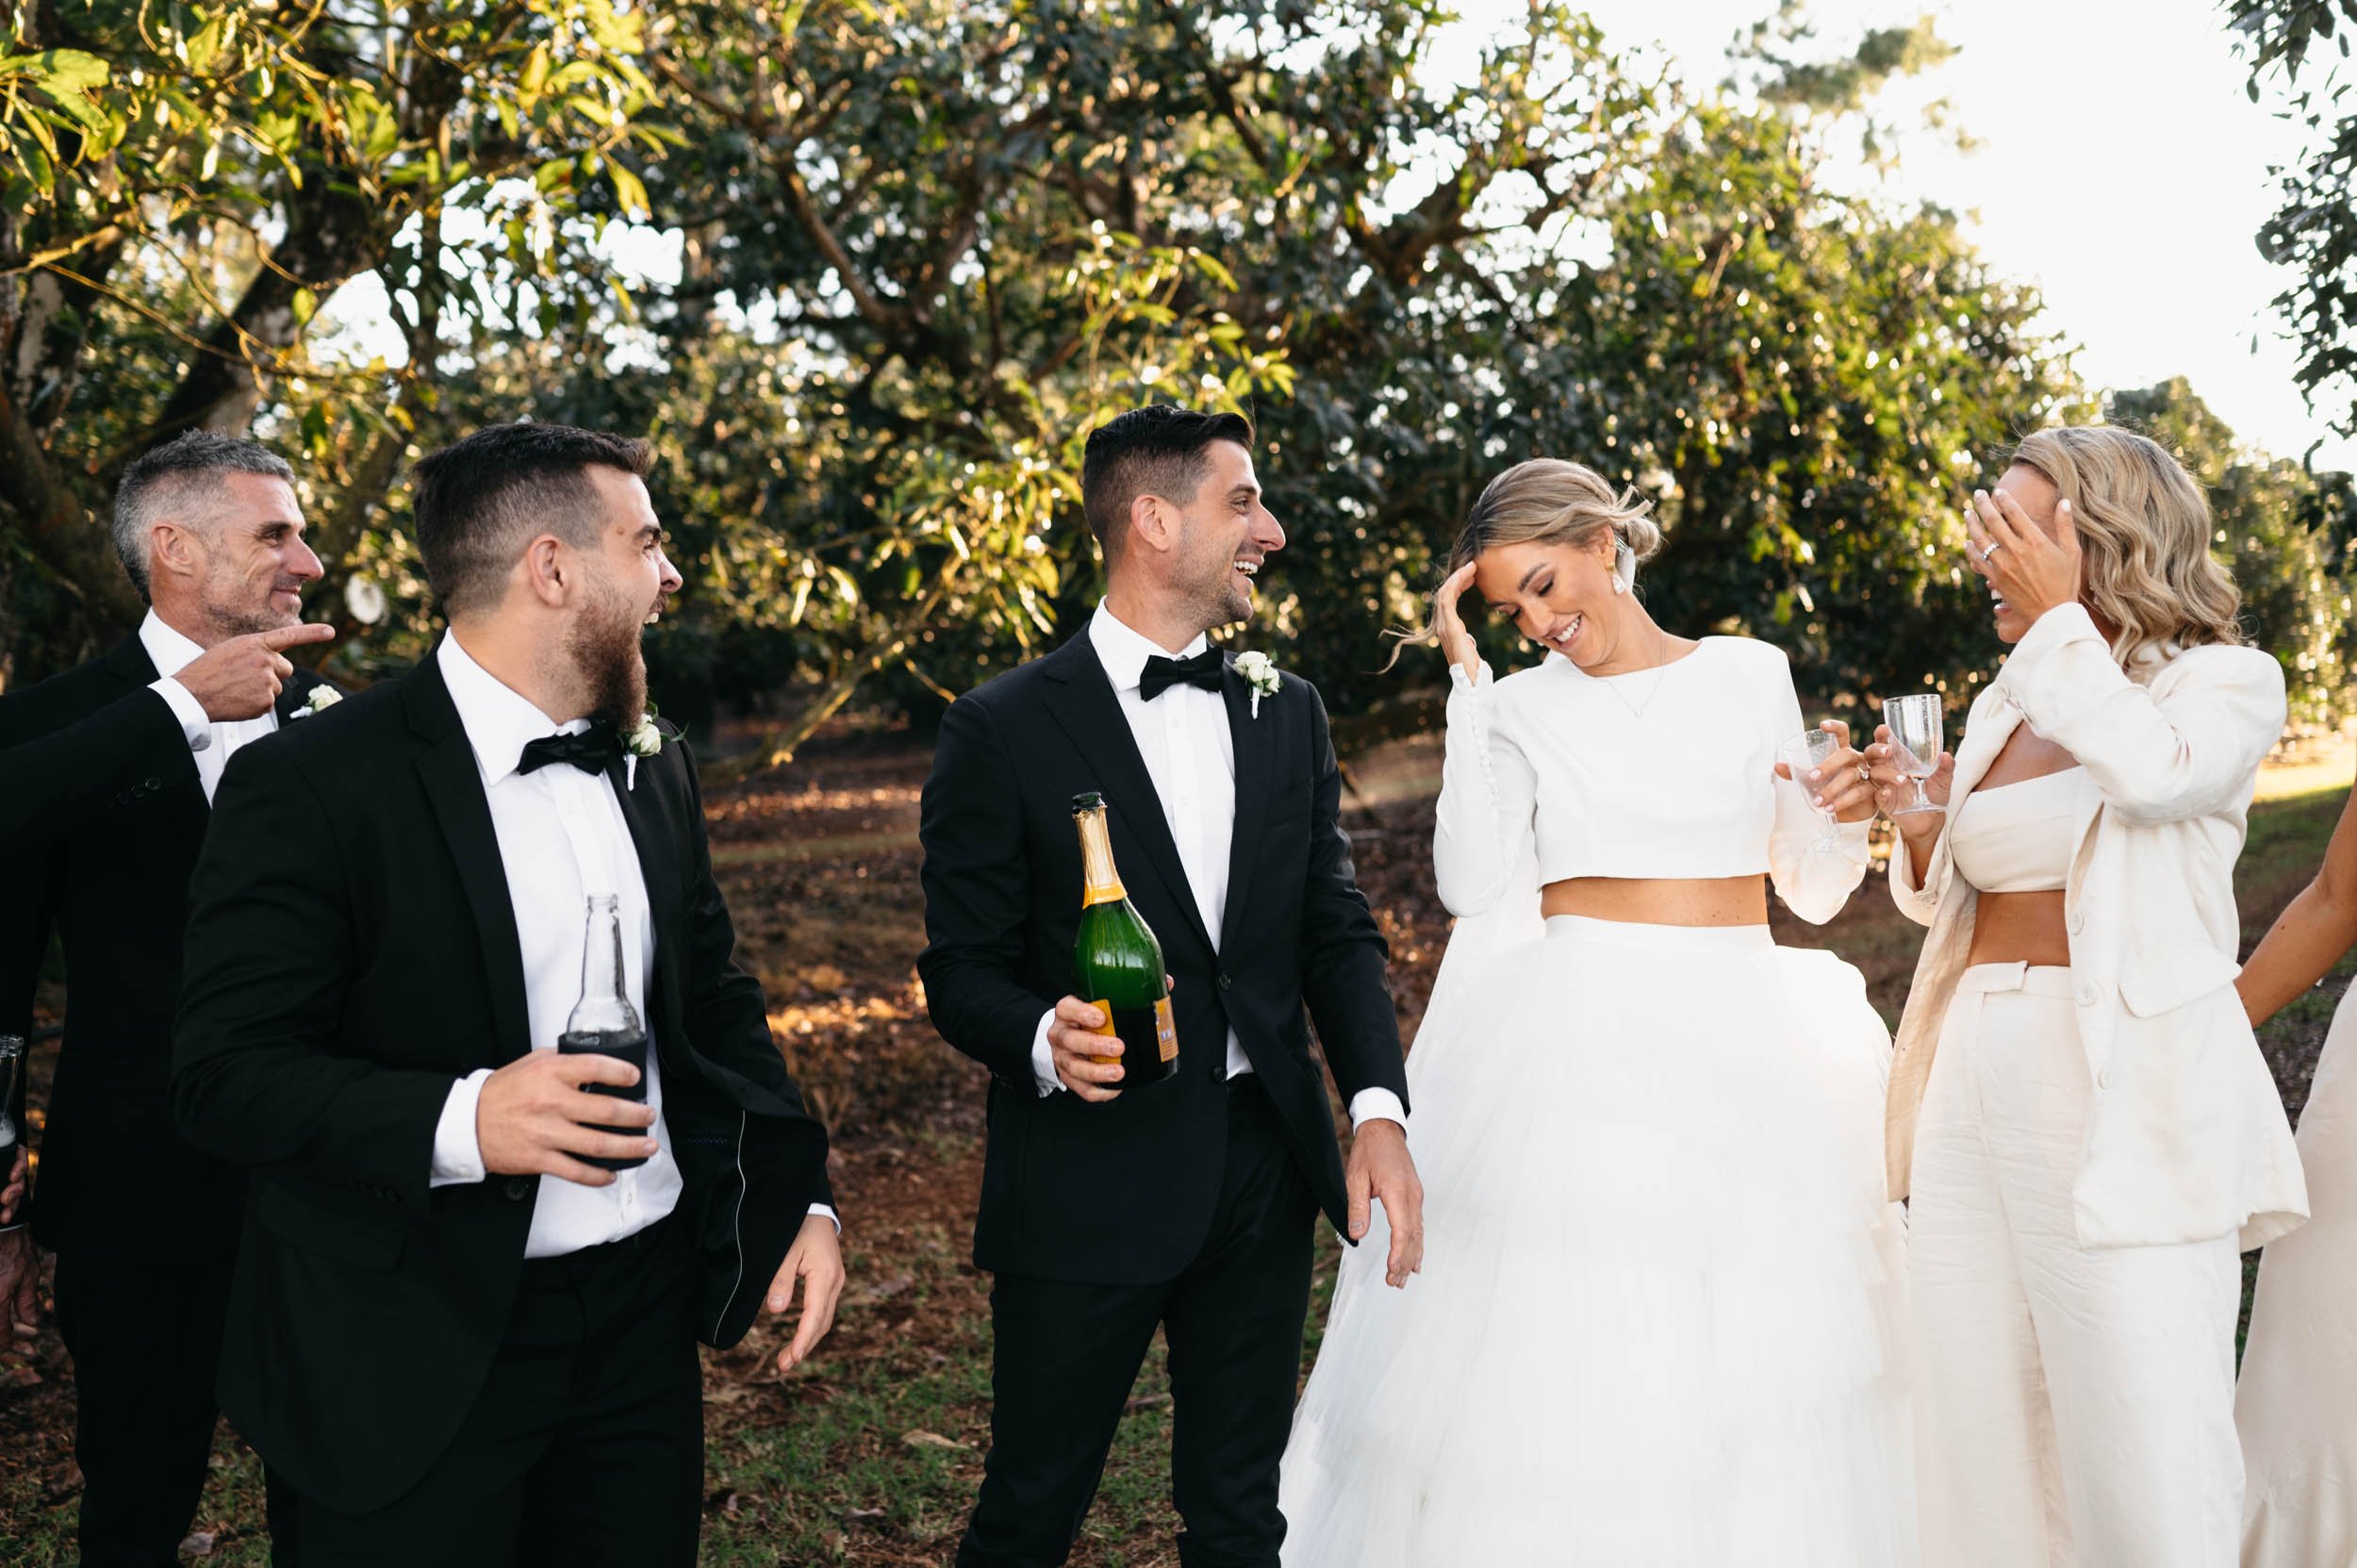 The Raw Photographer - Cairns Wedding Photographer - Mareeba Tablelands - Queensland photography - Kyha dress - luxury-49.jpg